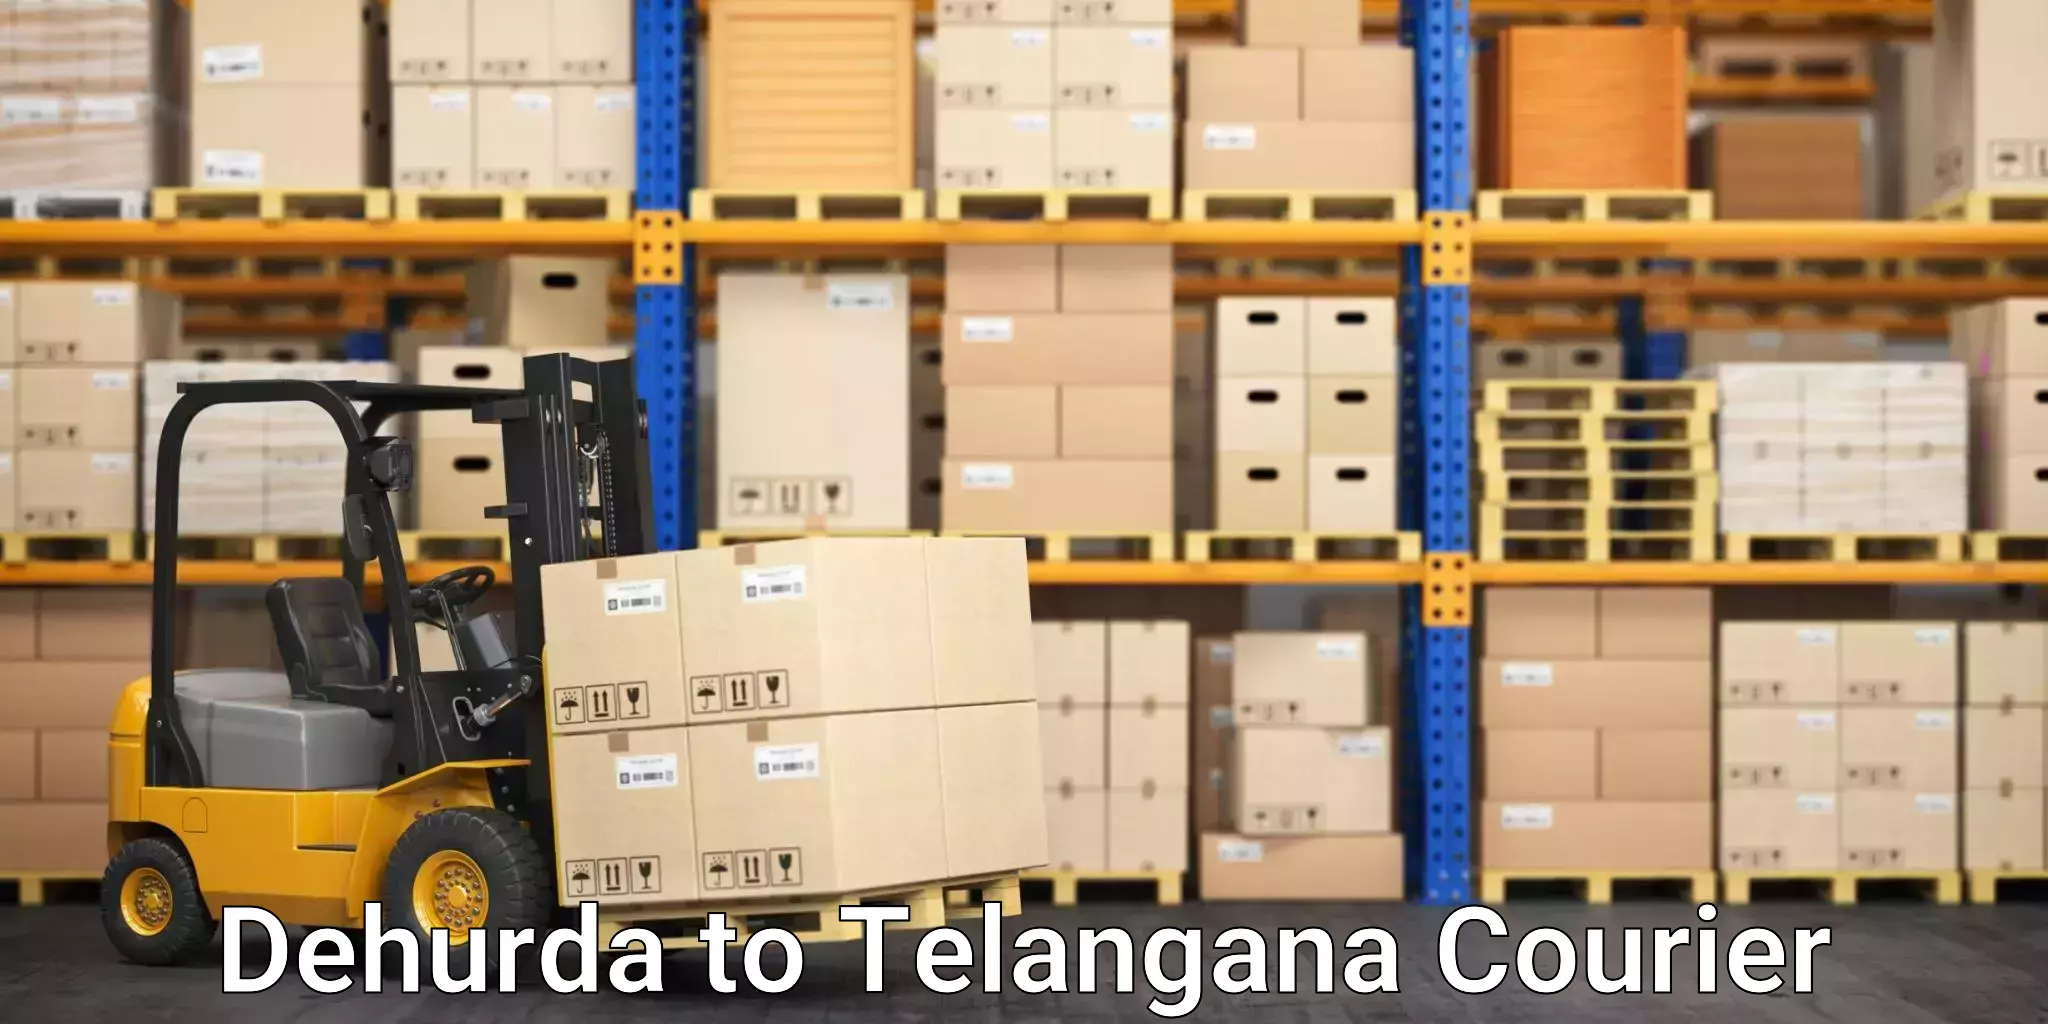 Specialized shipment handling Dehurda to Bhainsa